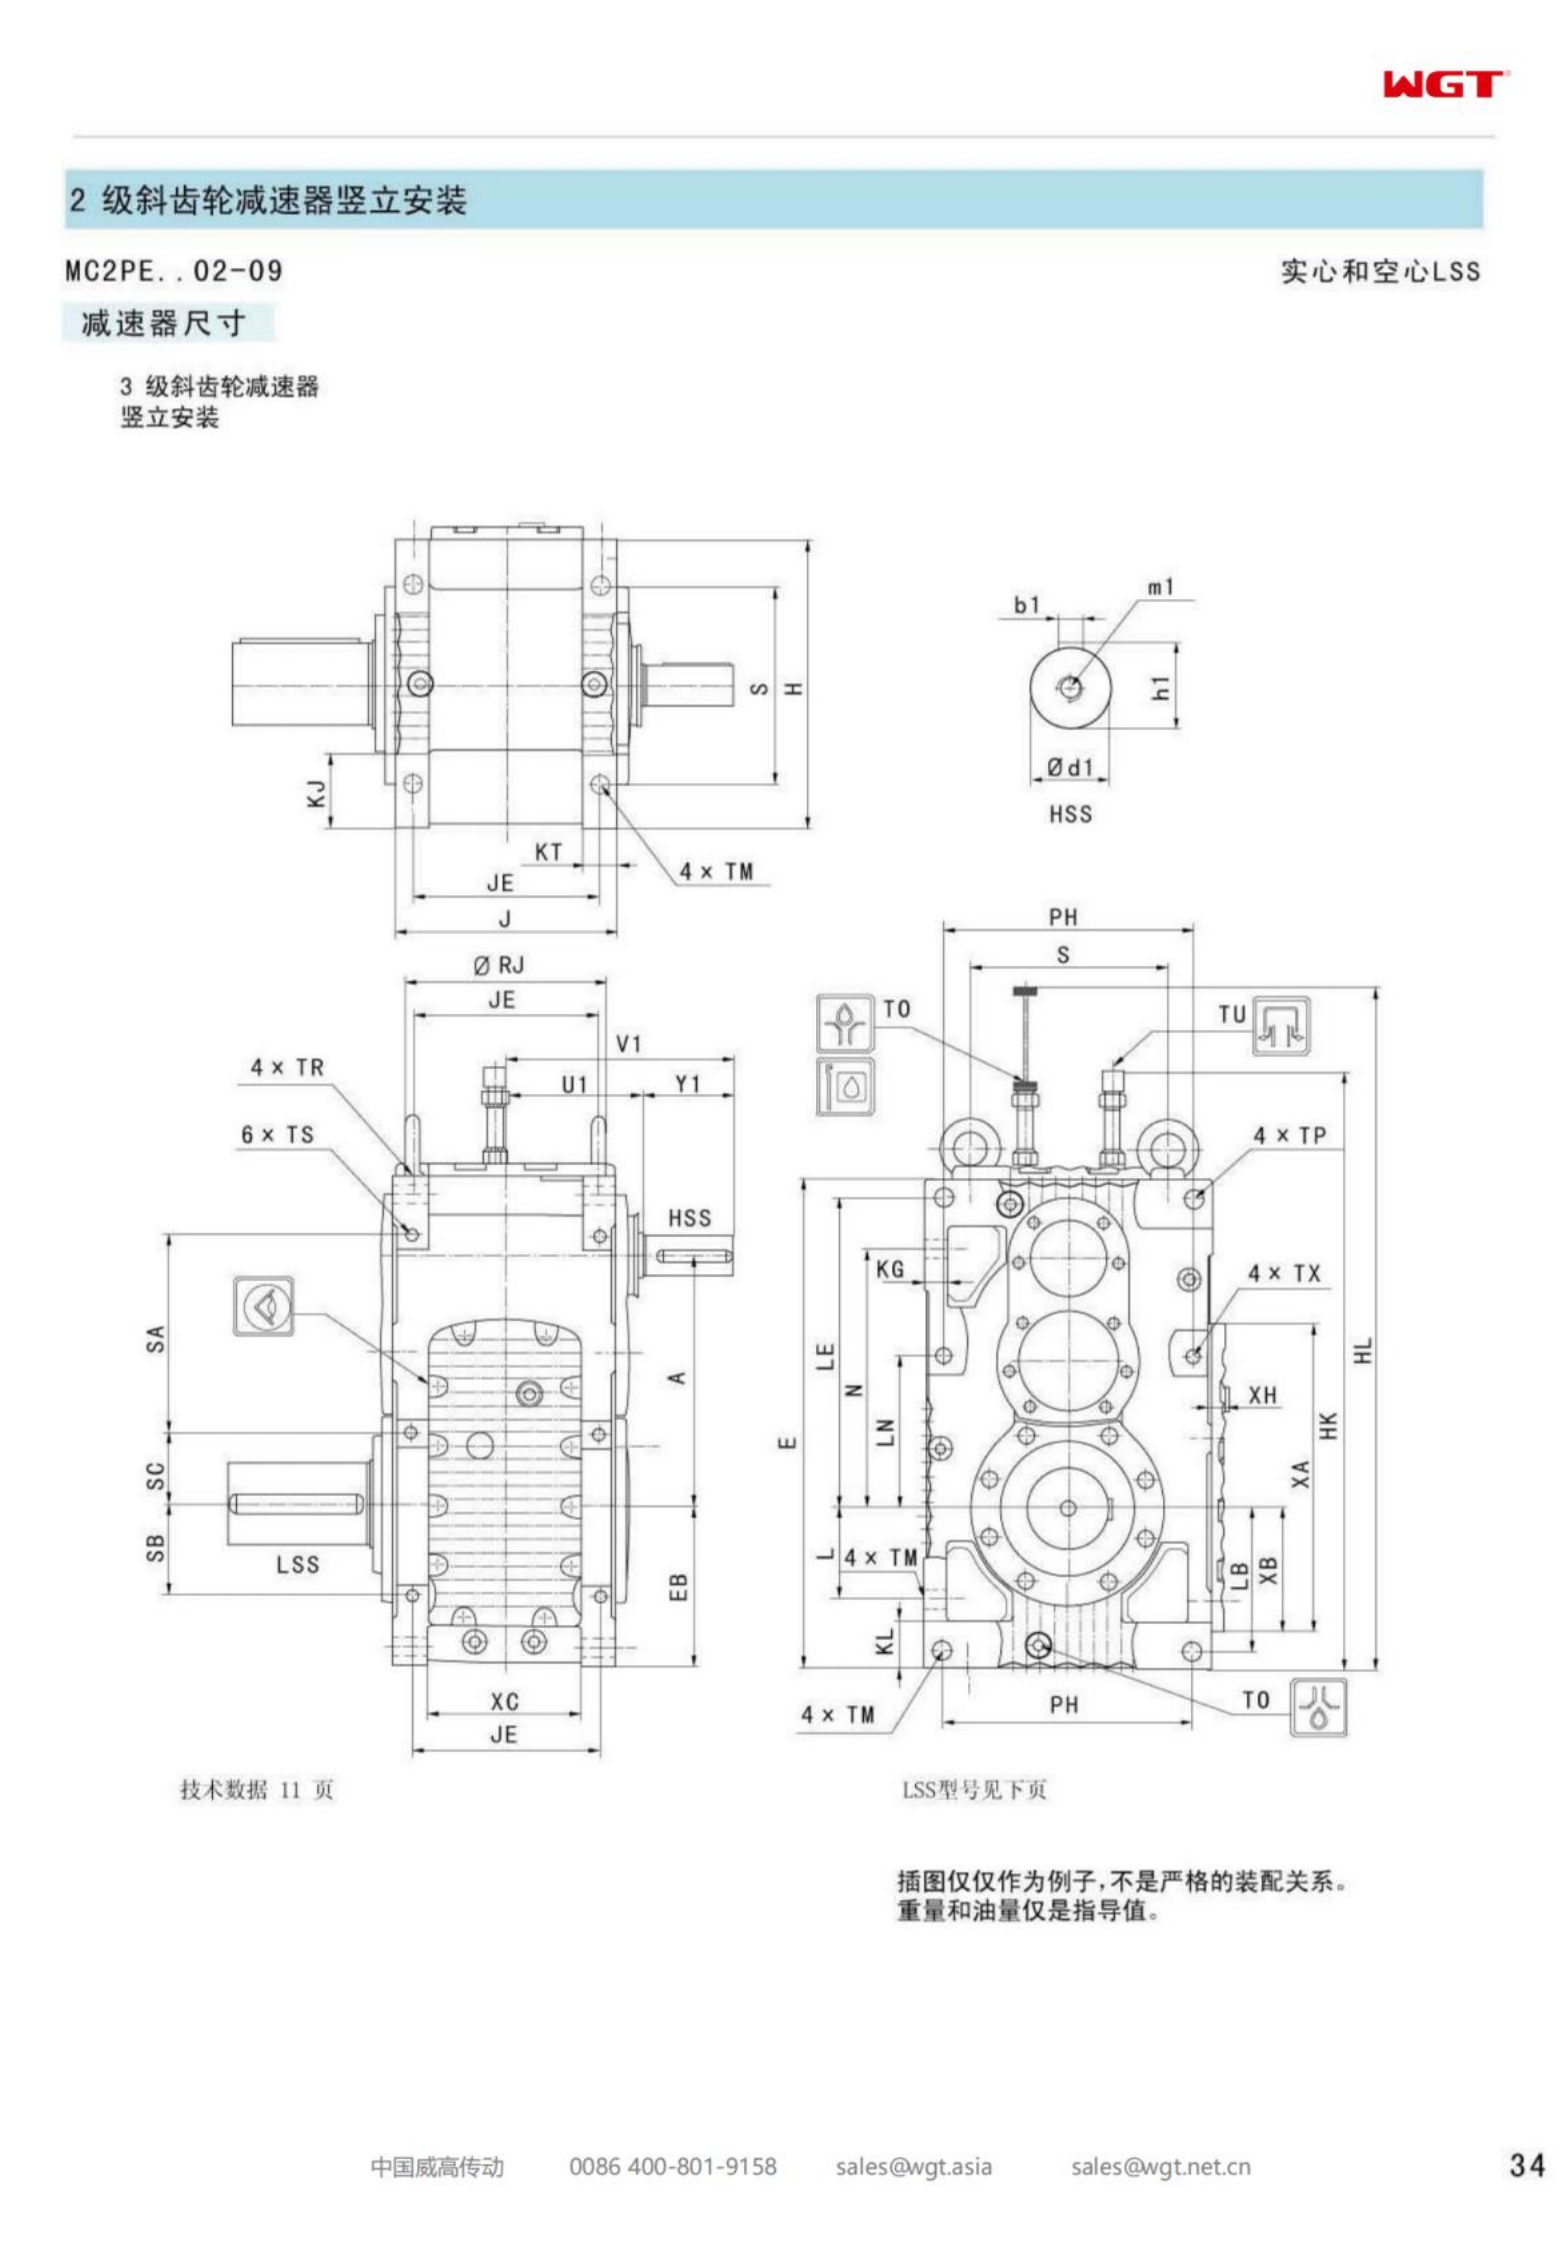 MC2PEHT09 replaces _SEW_MC_ series gearbox (patent)